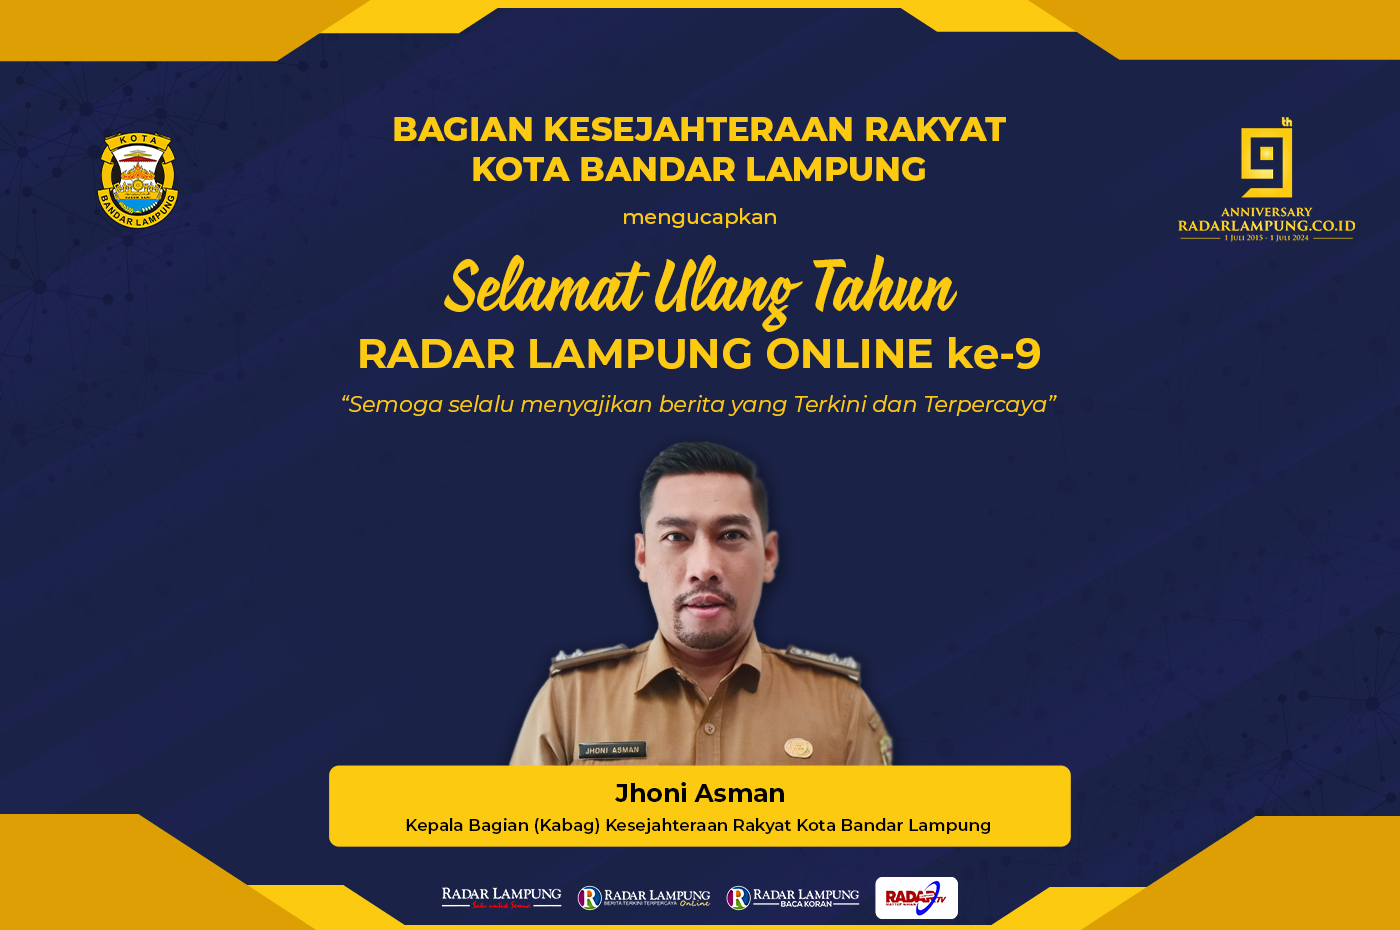 Bagian Kesejahteraan Rakyat (Kesra) Kota Bandar Lampung Mengucapkan Selamat Hari Jadi Radar Lampung Online ke-